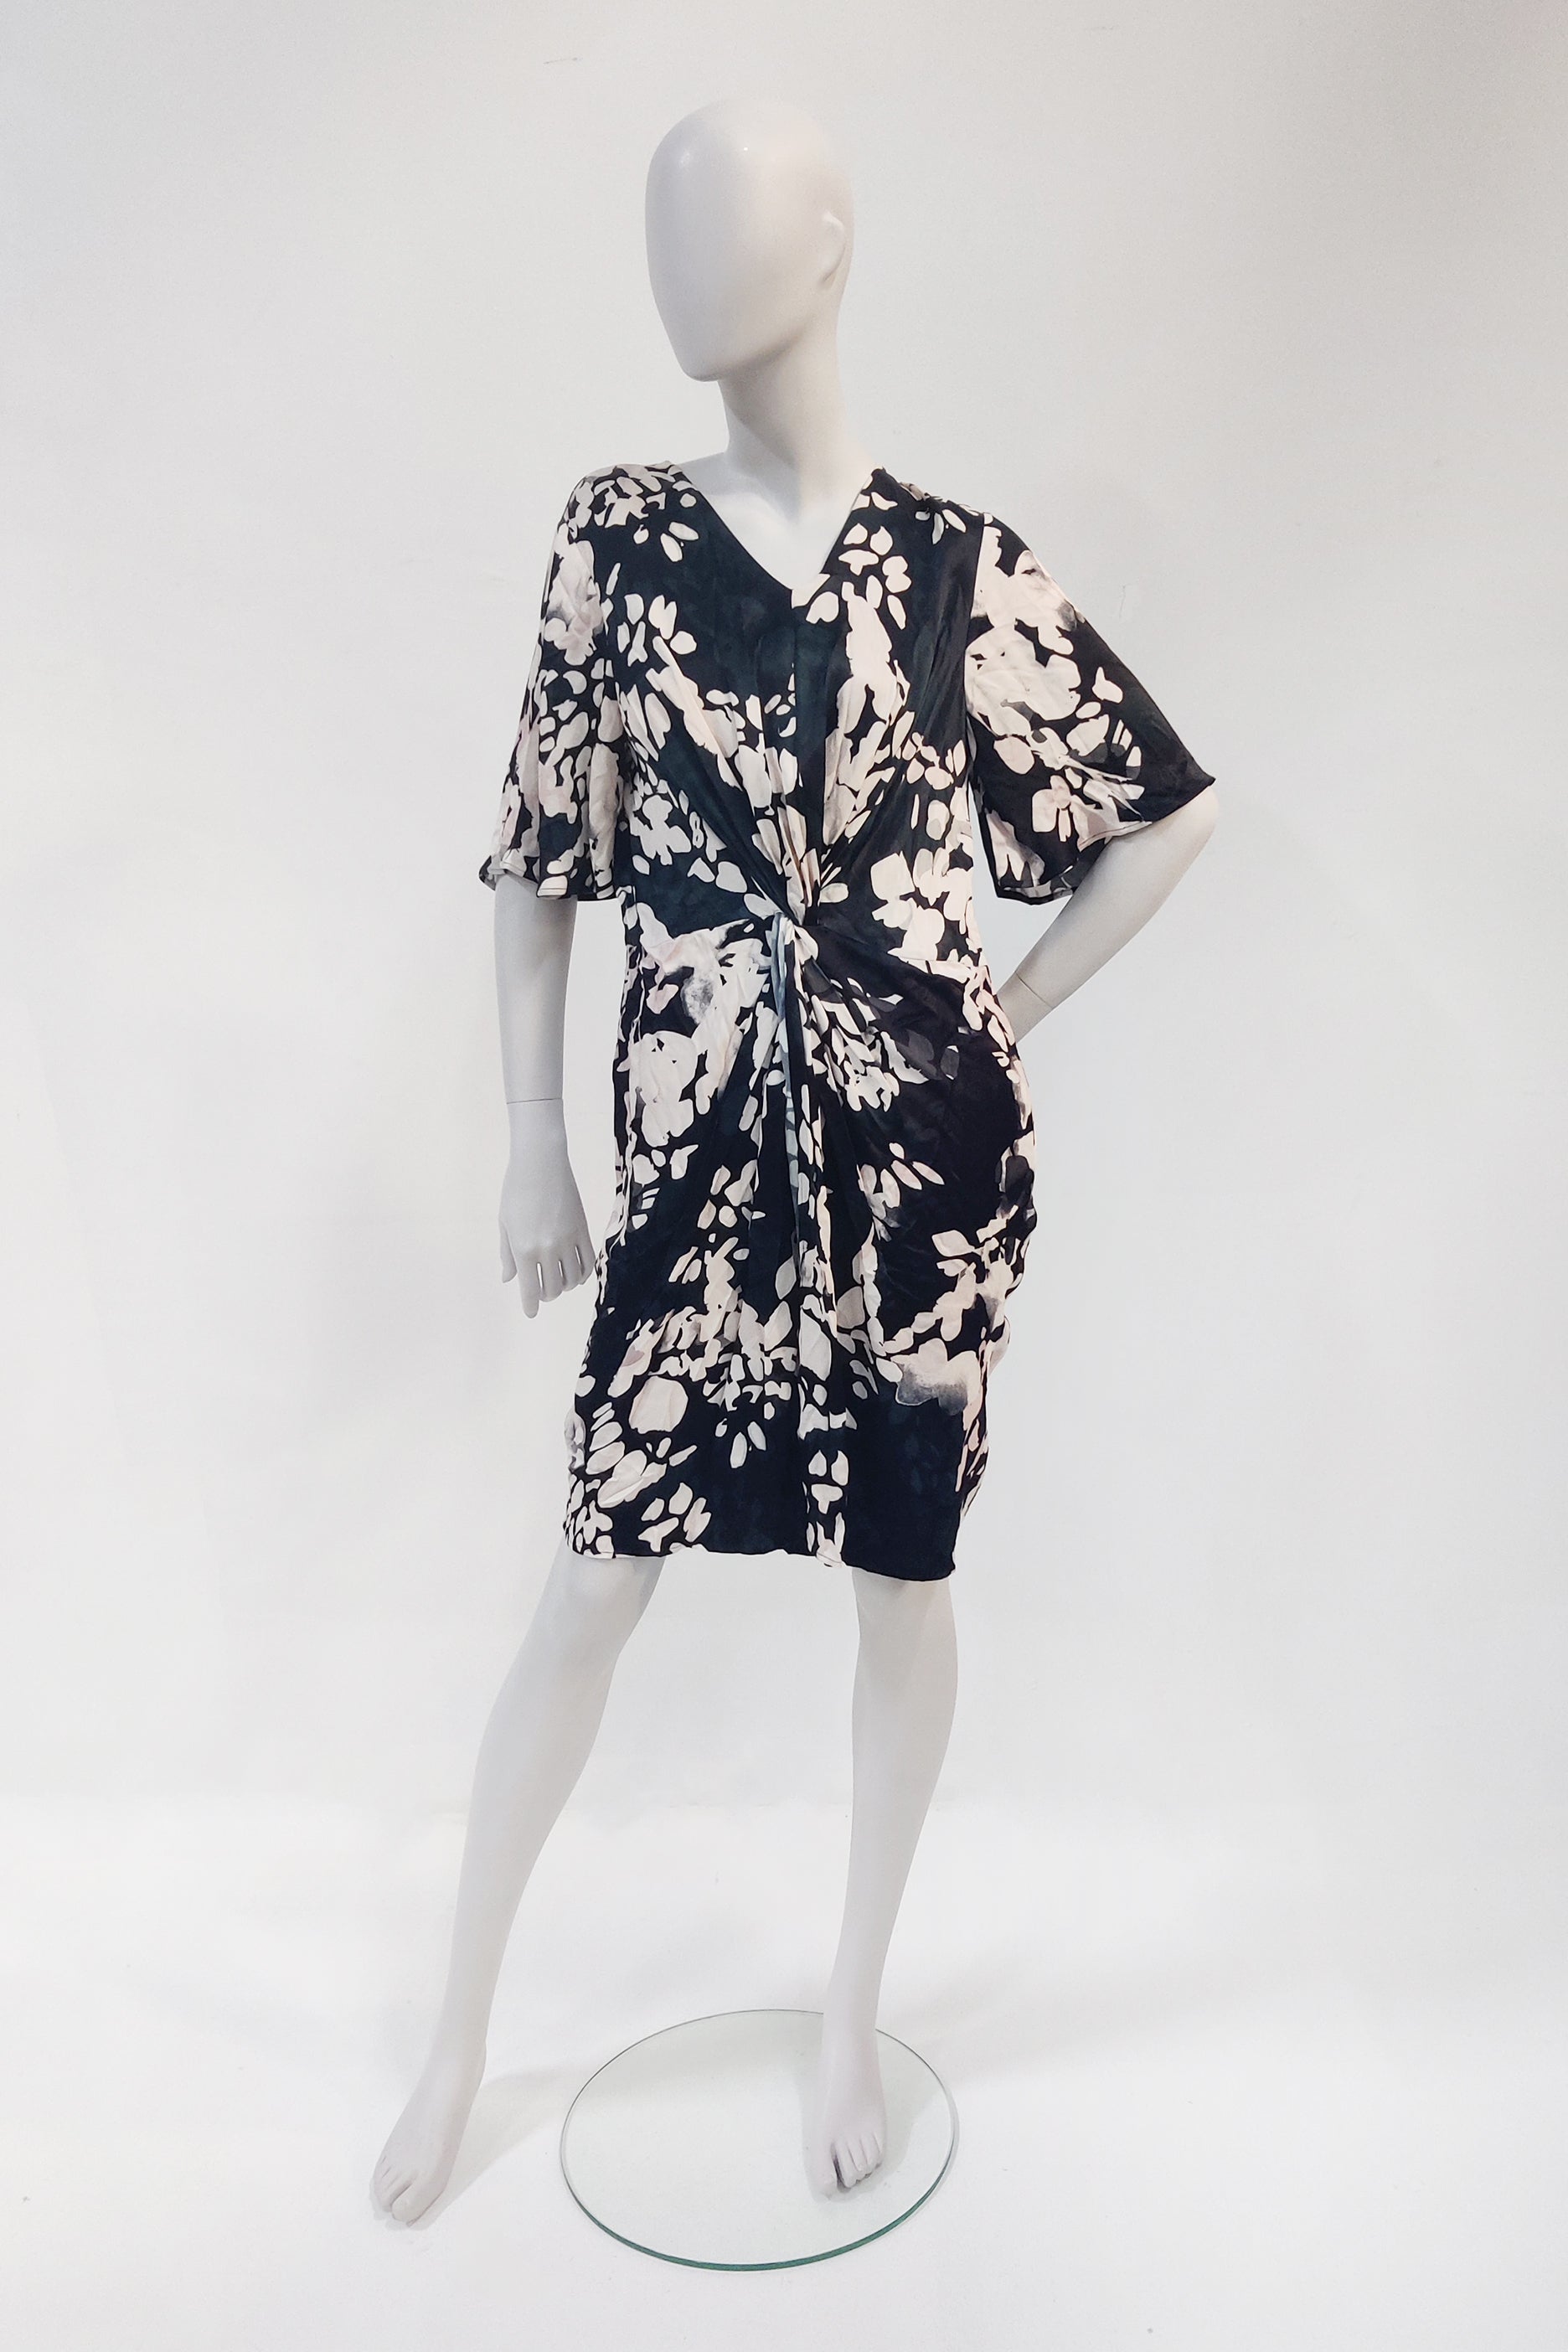 Monochrome Floral Dress (Eu42)